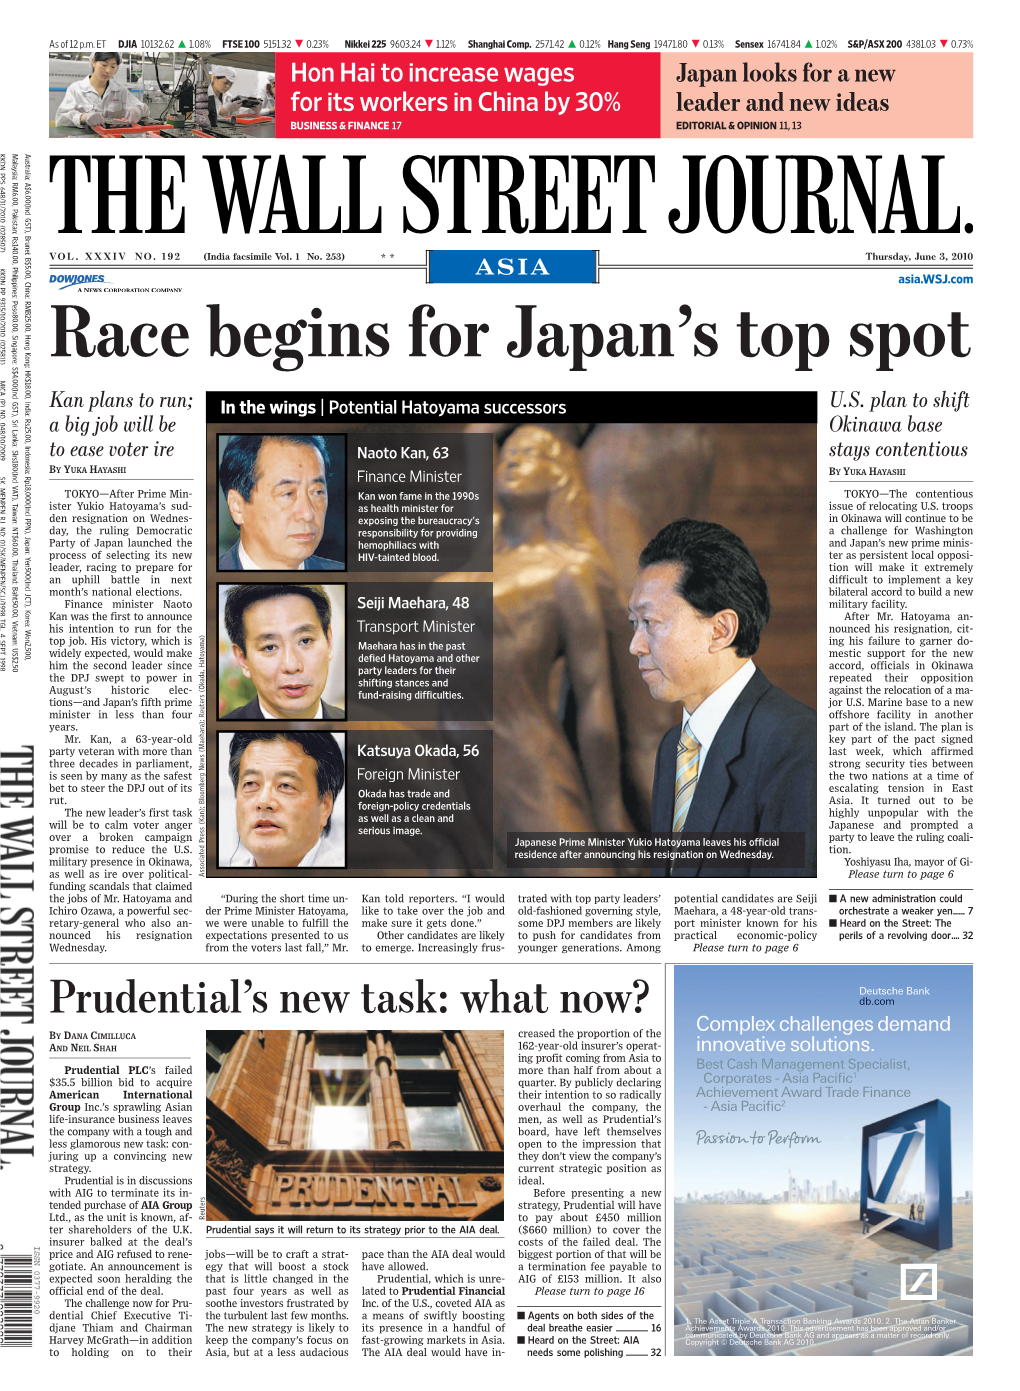 Race Begins for Japan's Top Spot